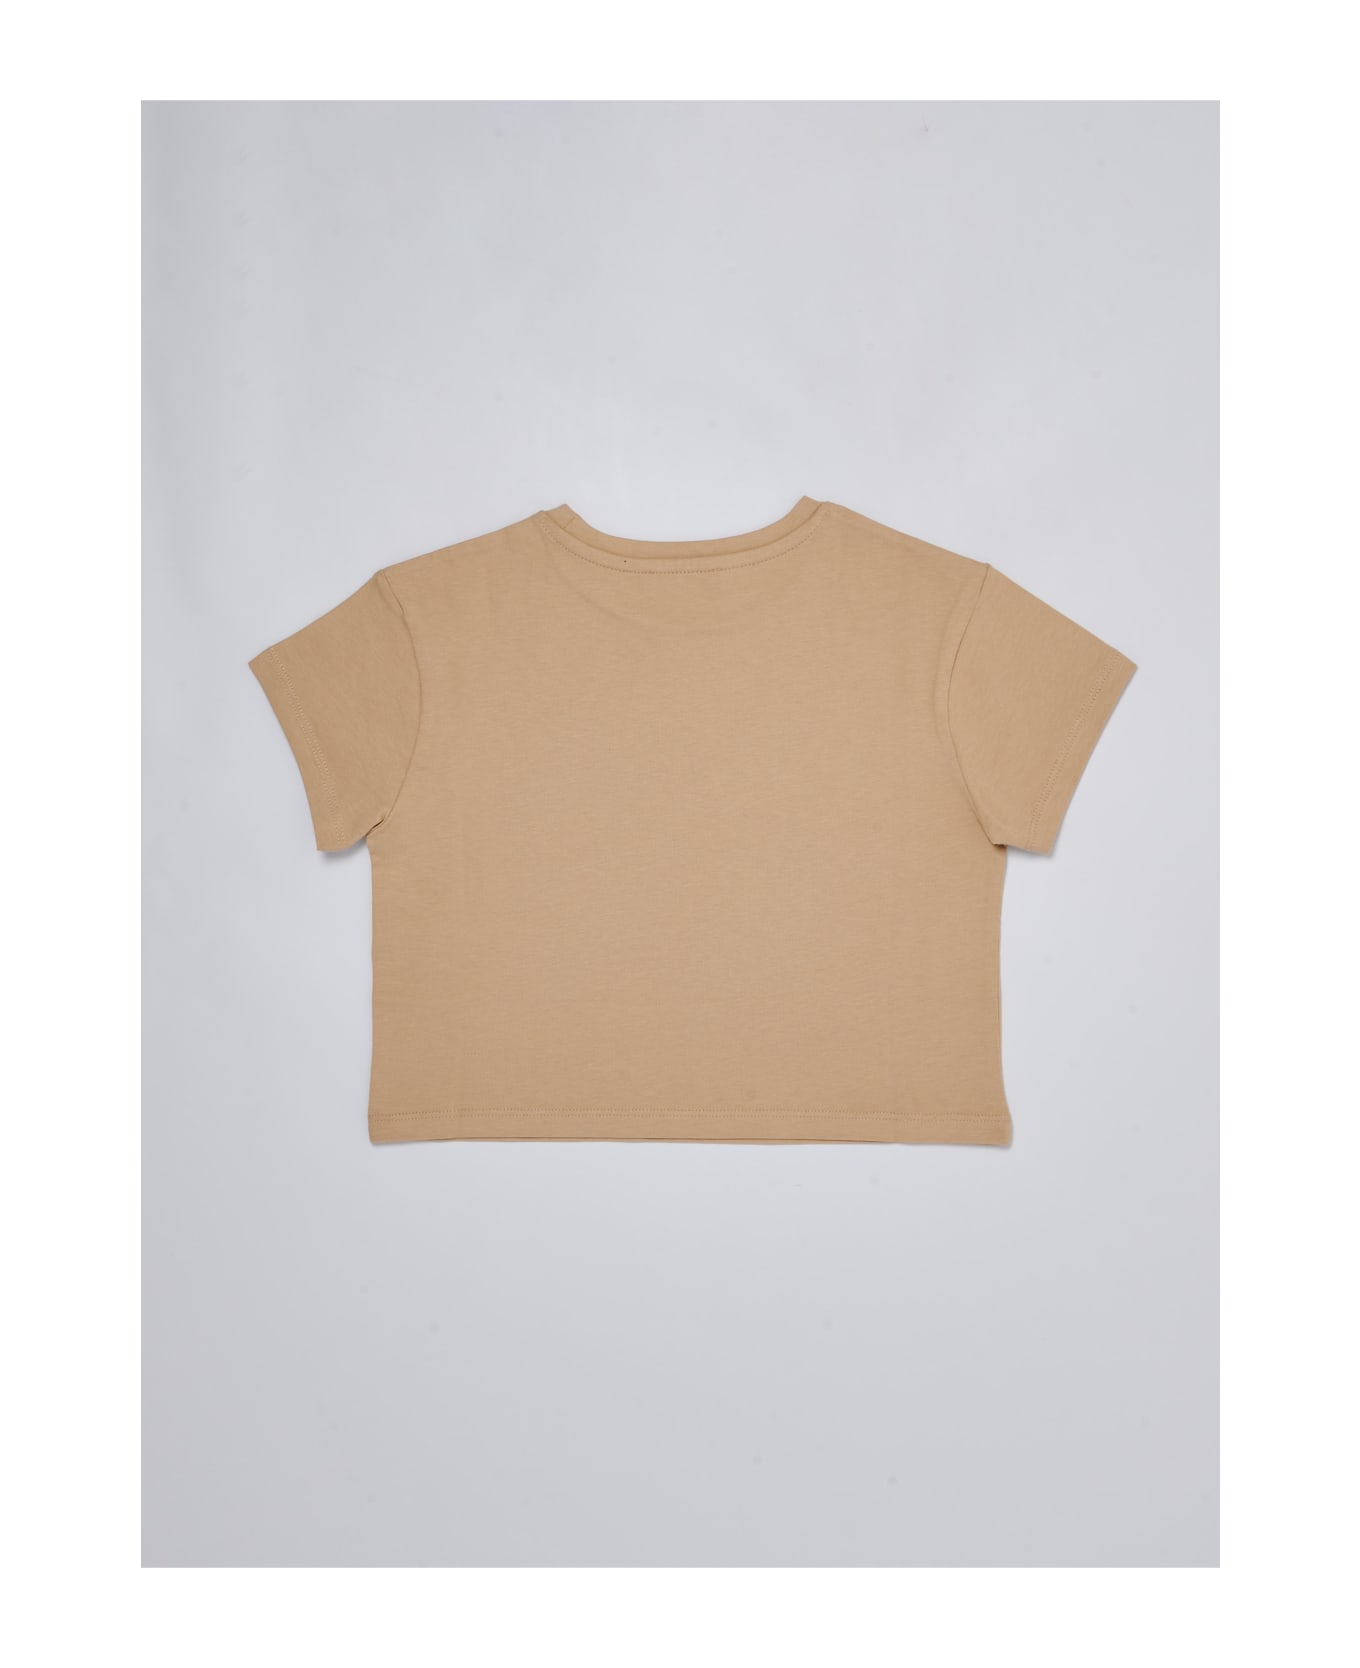 Michael Kors T-shirt T-shirt - CORDA